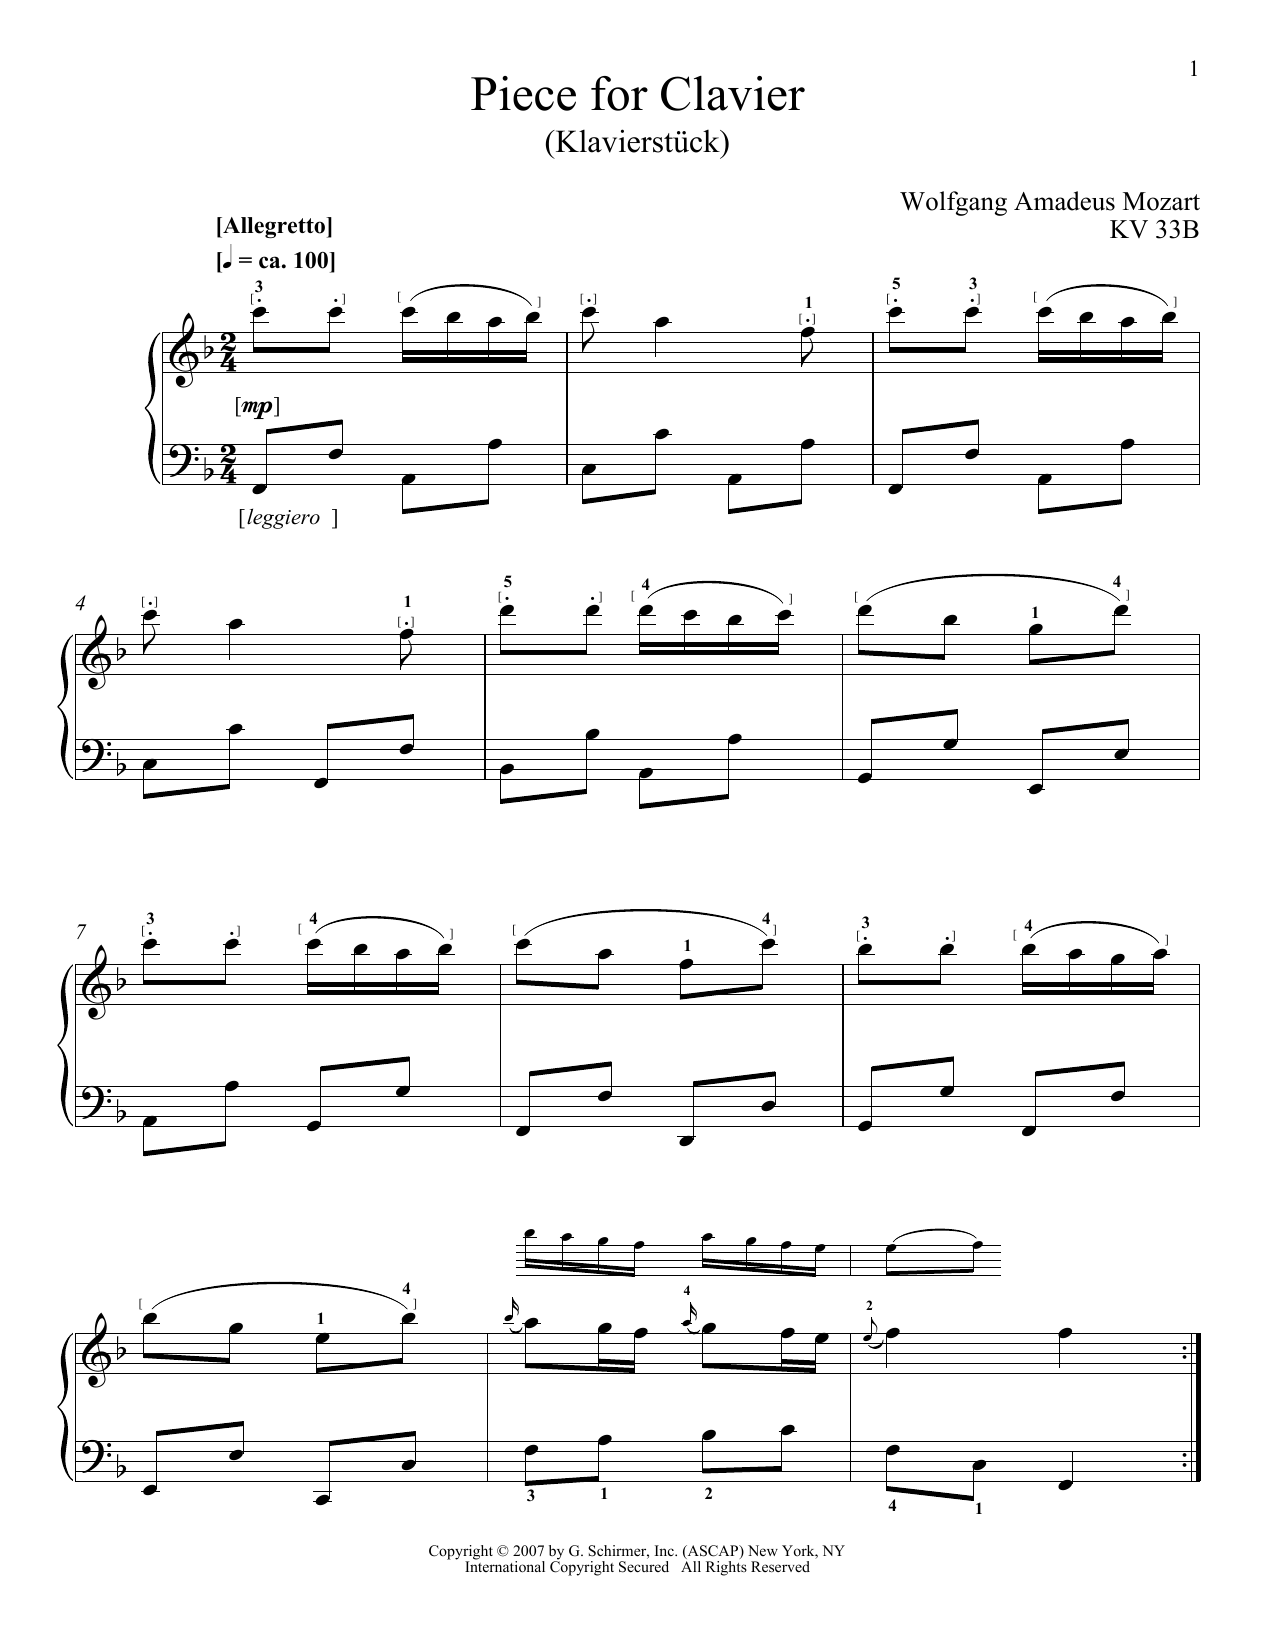 Download Wolfgang Amadeus Mozart Piano Piece (Klavierstuck) Sheet Music